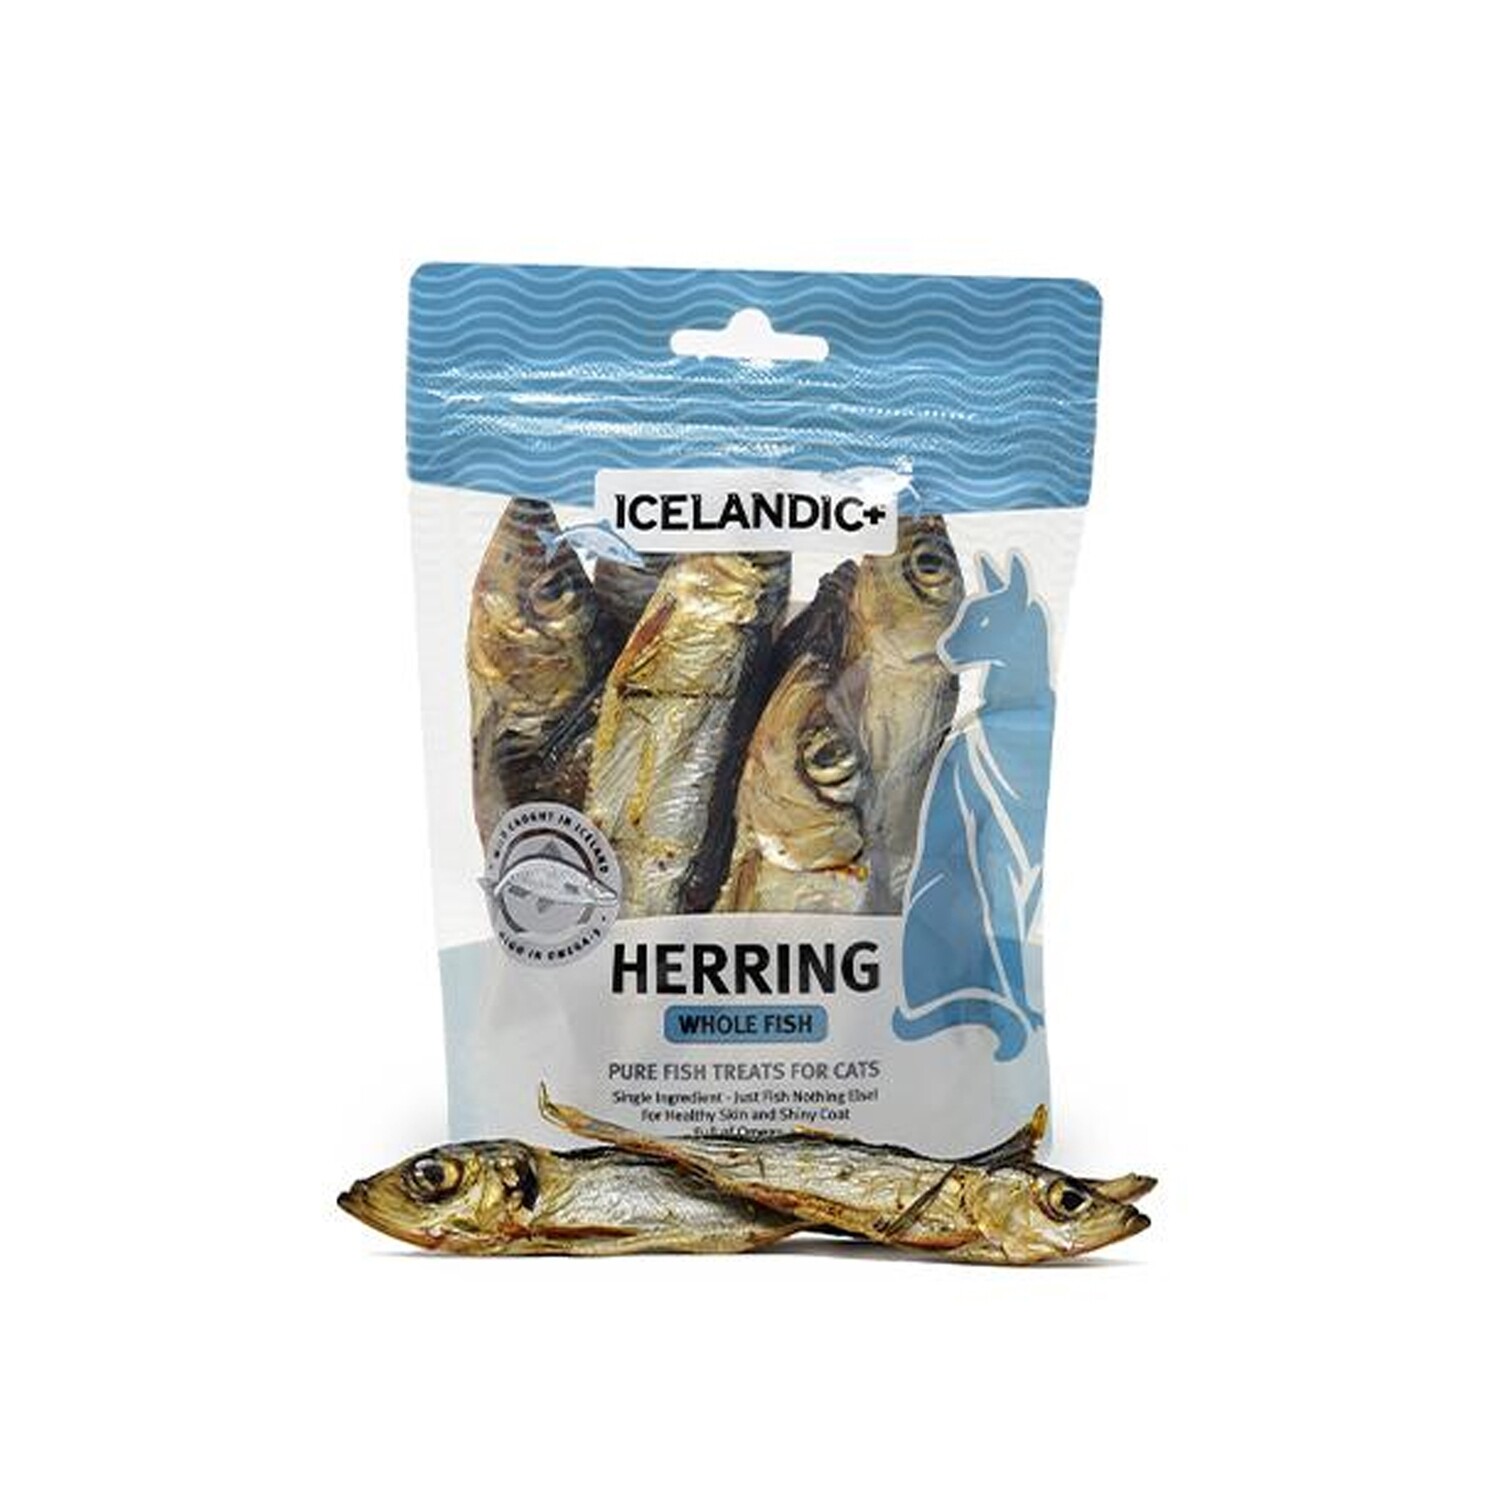 Icelandic+ Fish Treat for Cats Herring Whole Fish-1.5oz